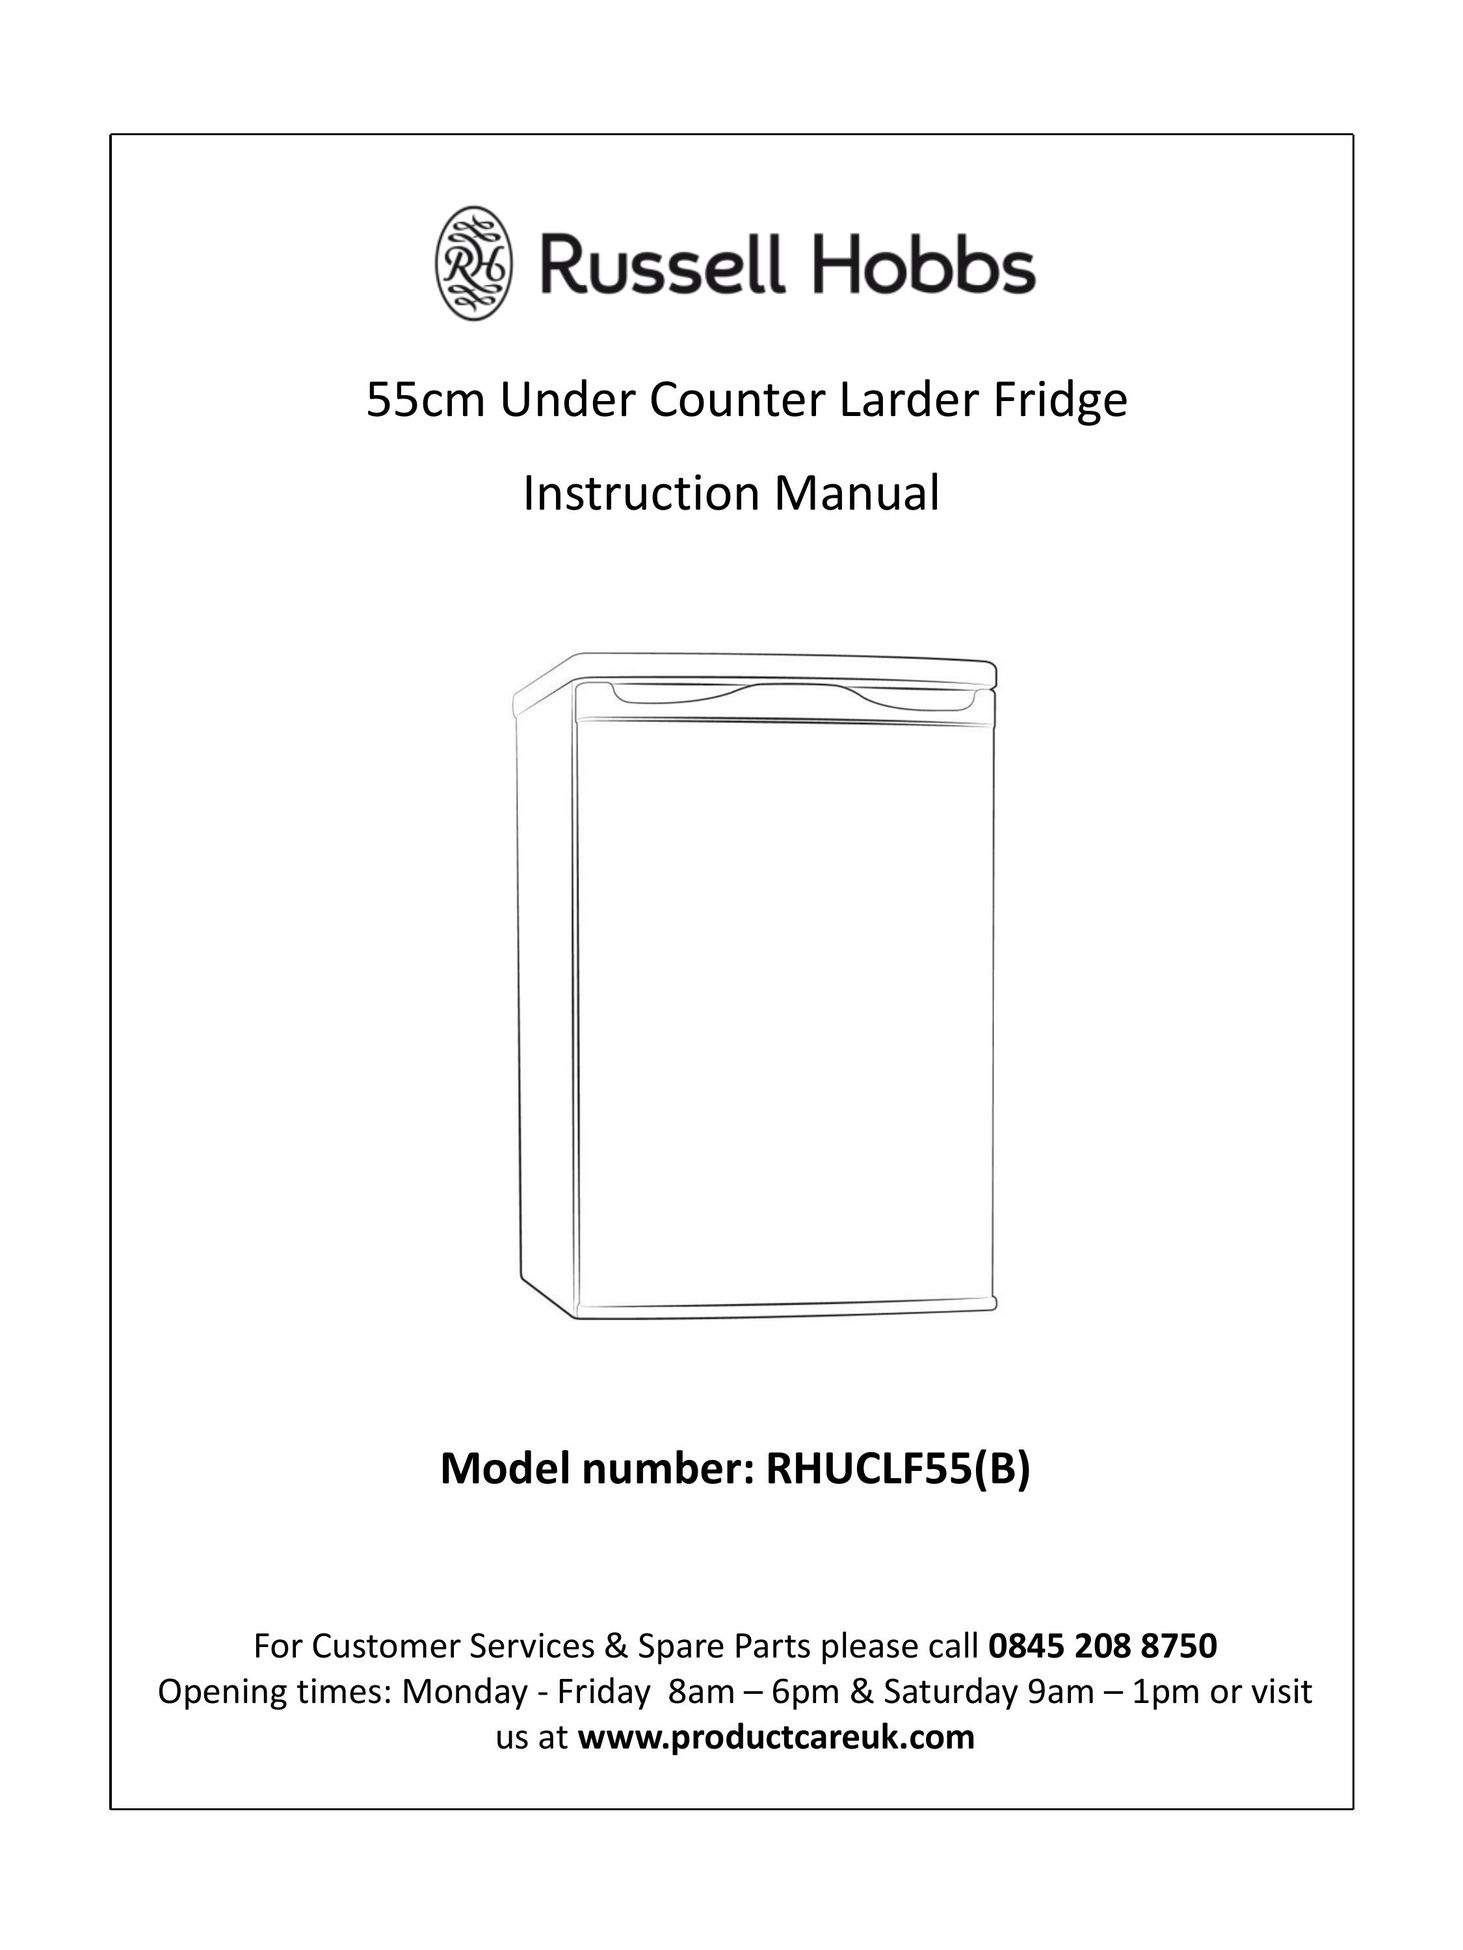 Russell Hobbs RHUCLF55(B) Freezer User Manual